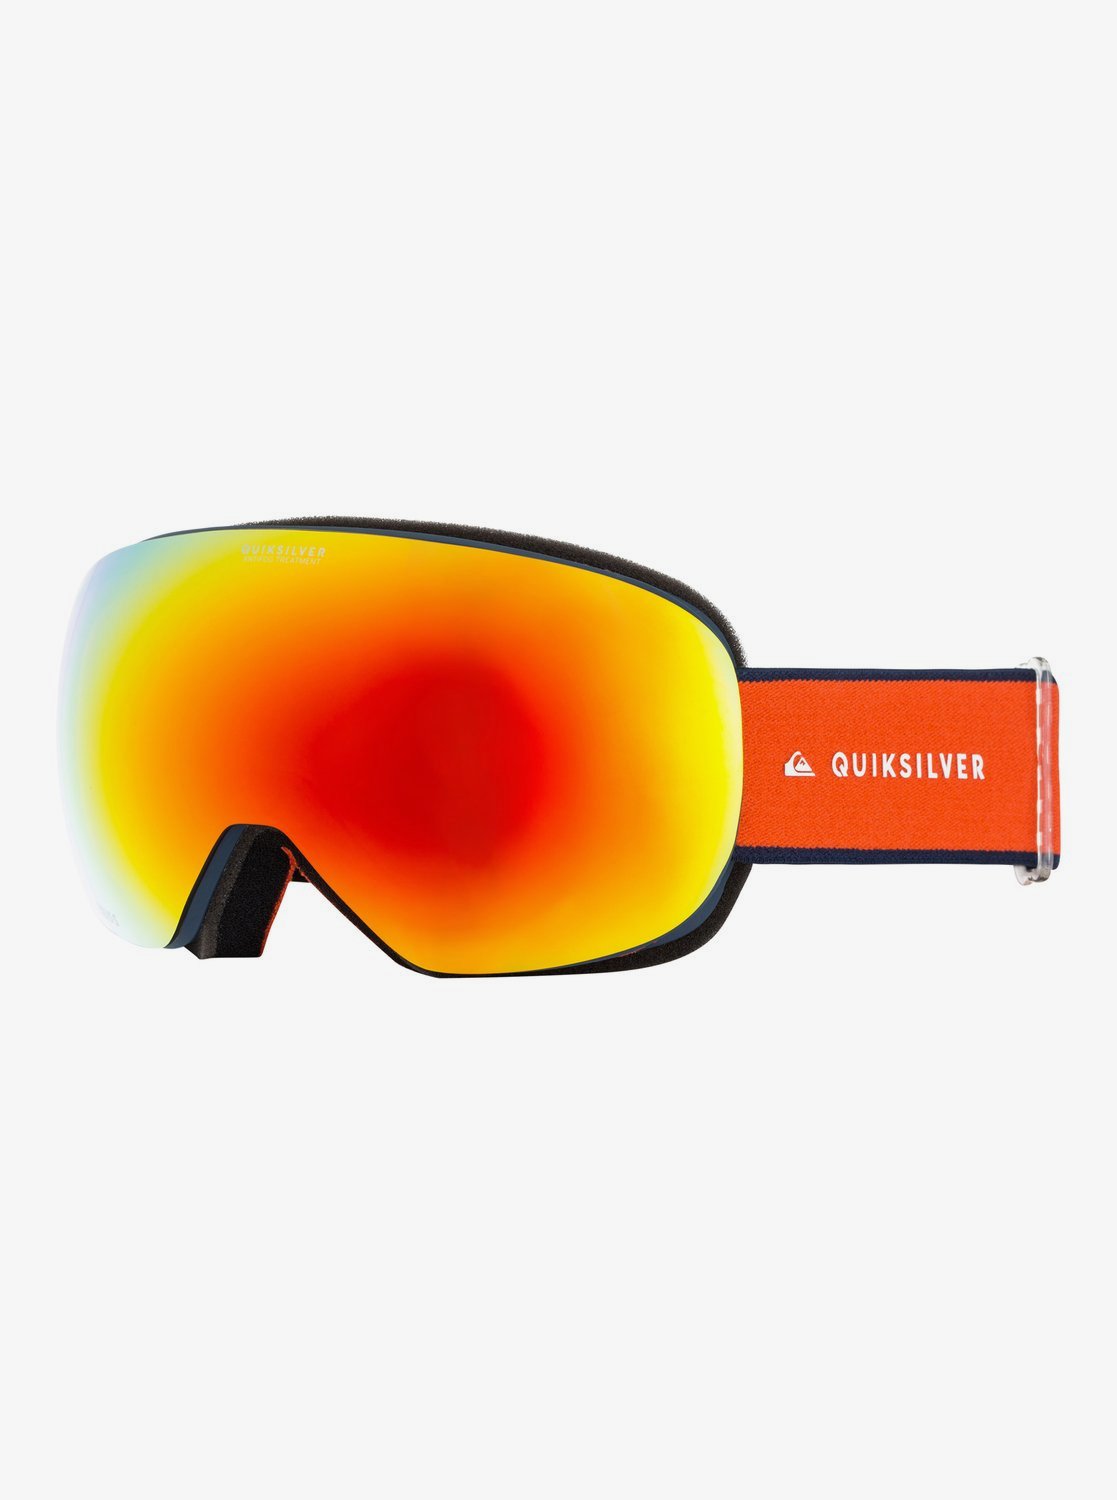 Quiksilver QS_R goggle navy blazer / NXT red chrome